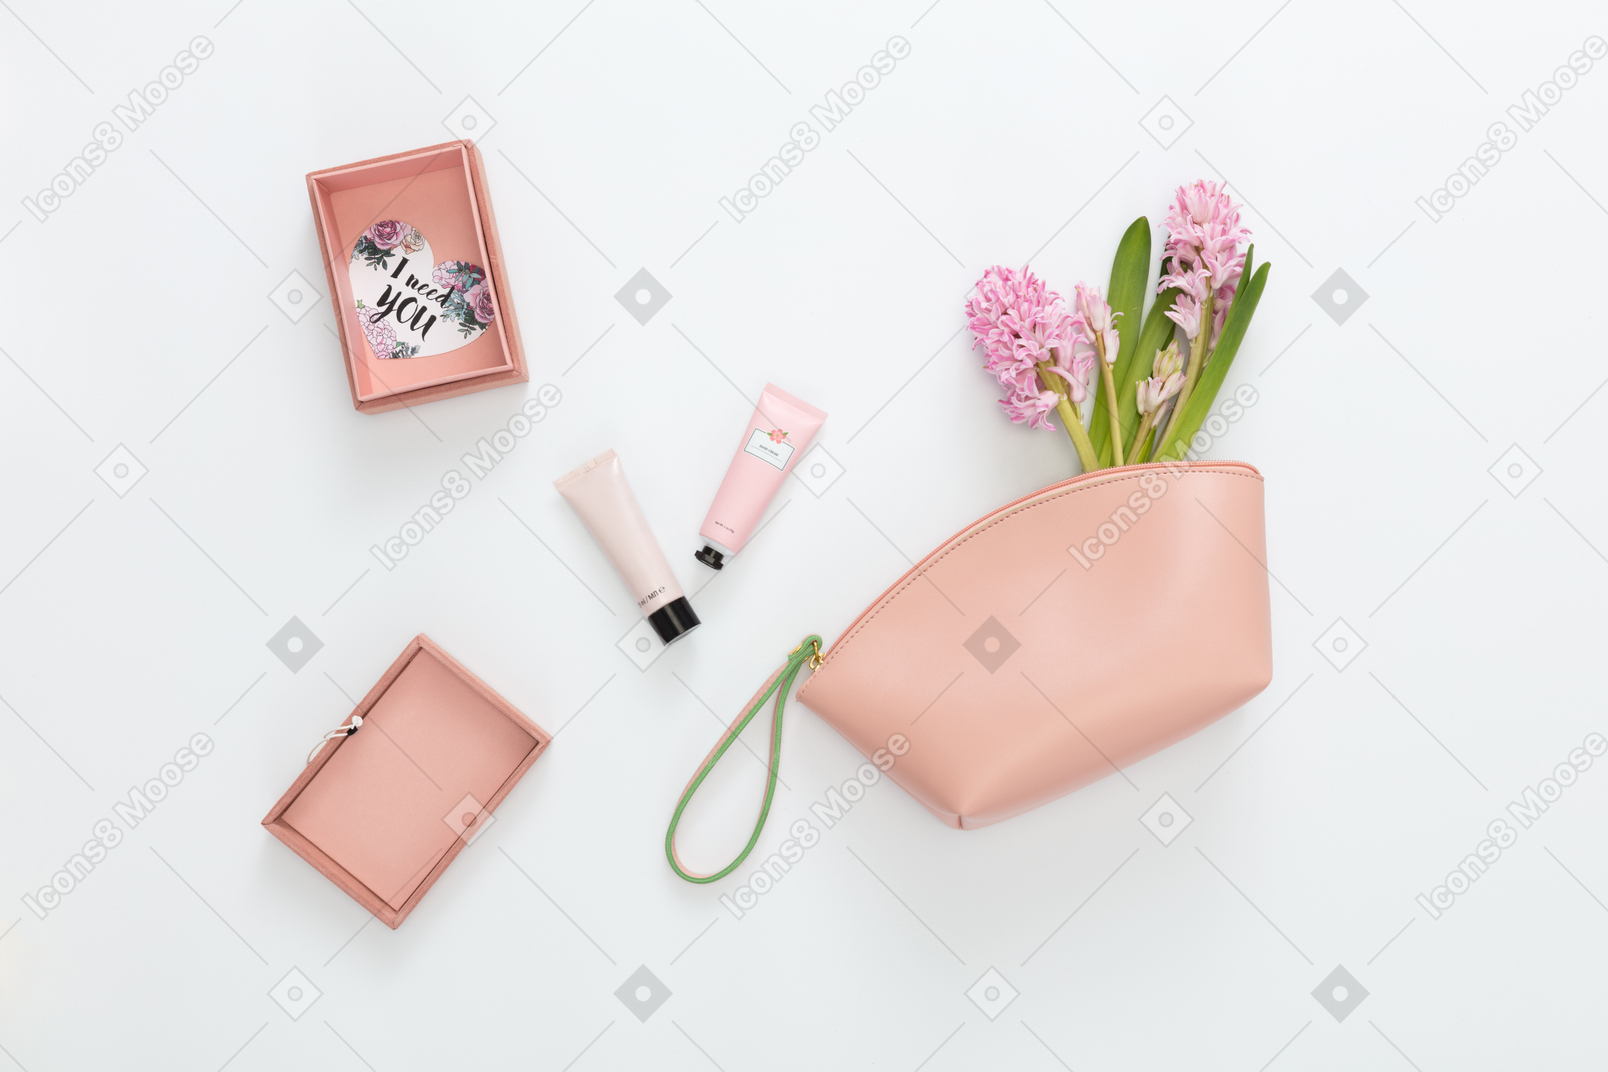 Female cosmetics